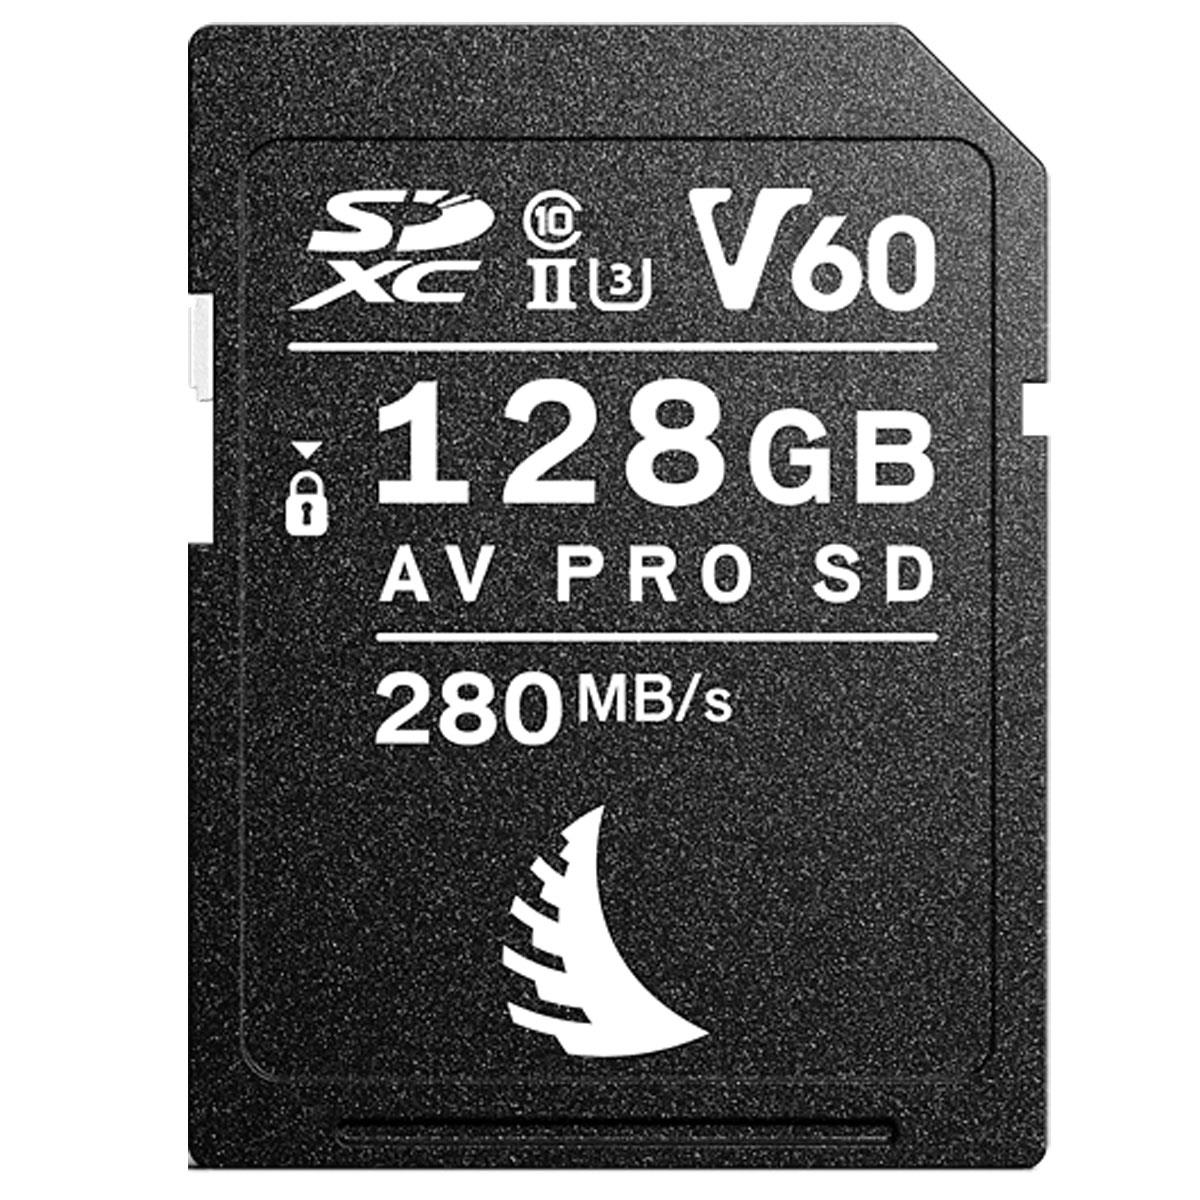 Angelbird AV PRO SD MK2 V60 128GB SDXC UHS-II Memory Card